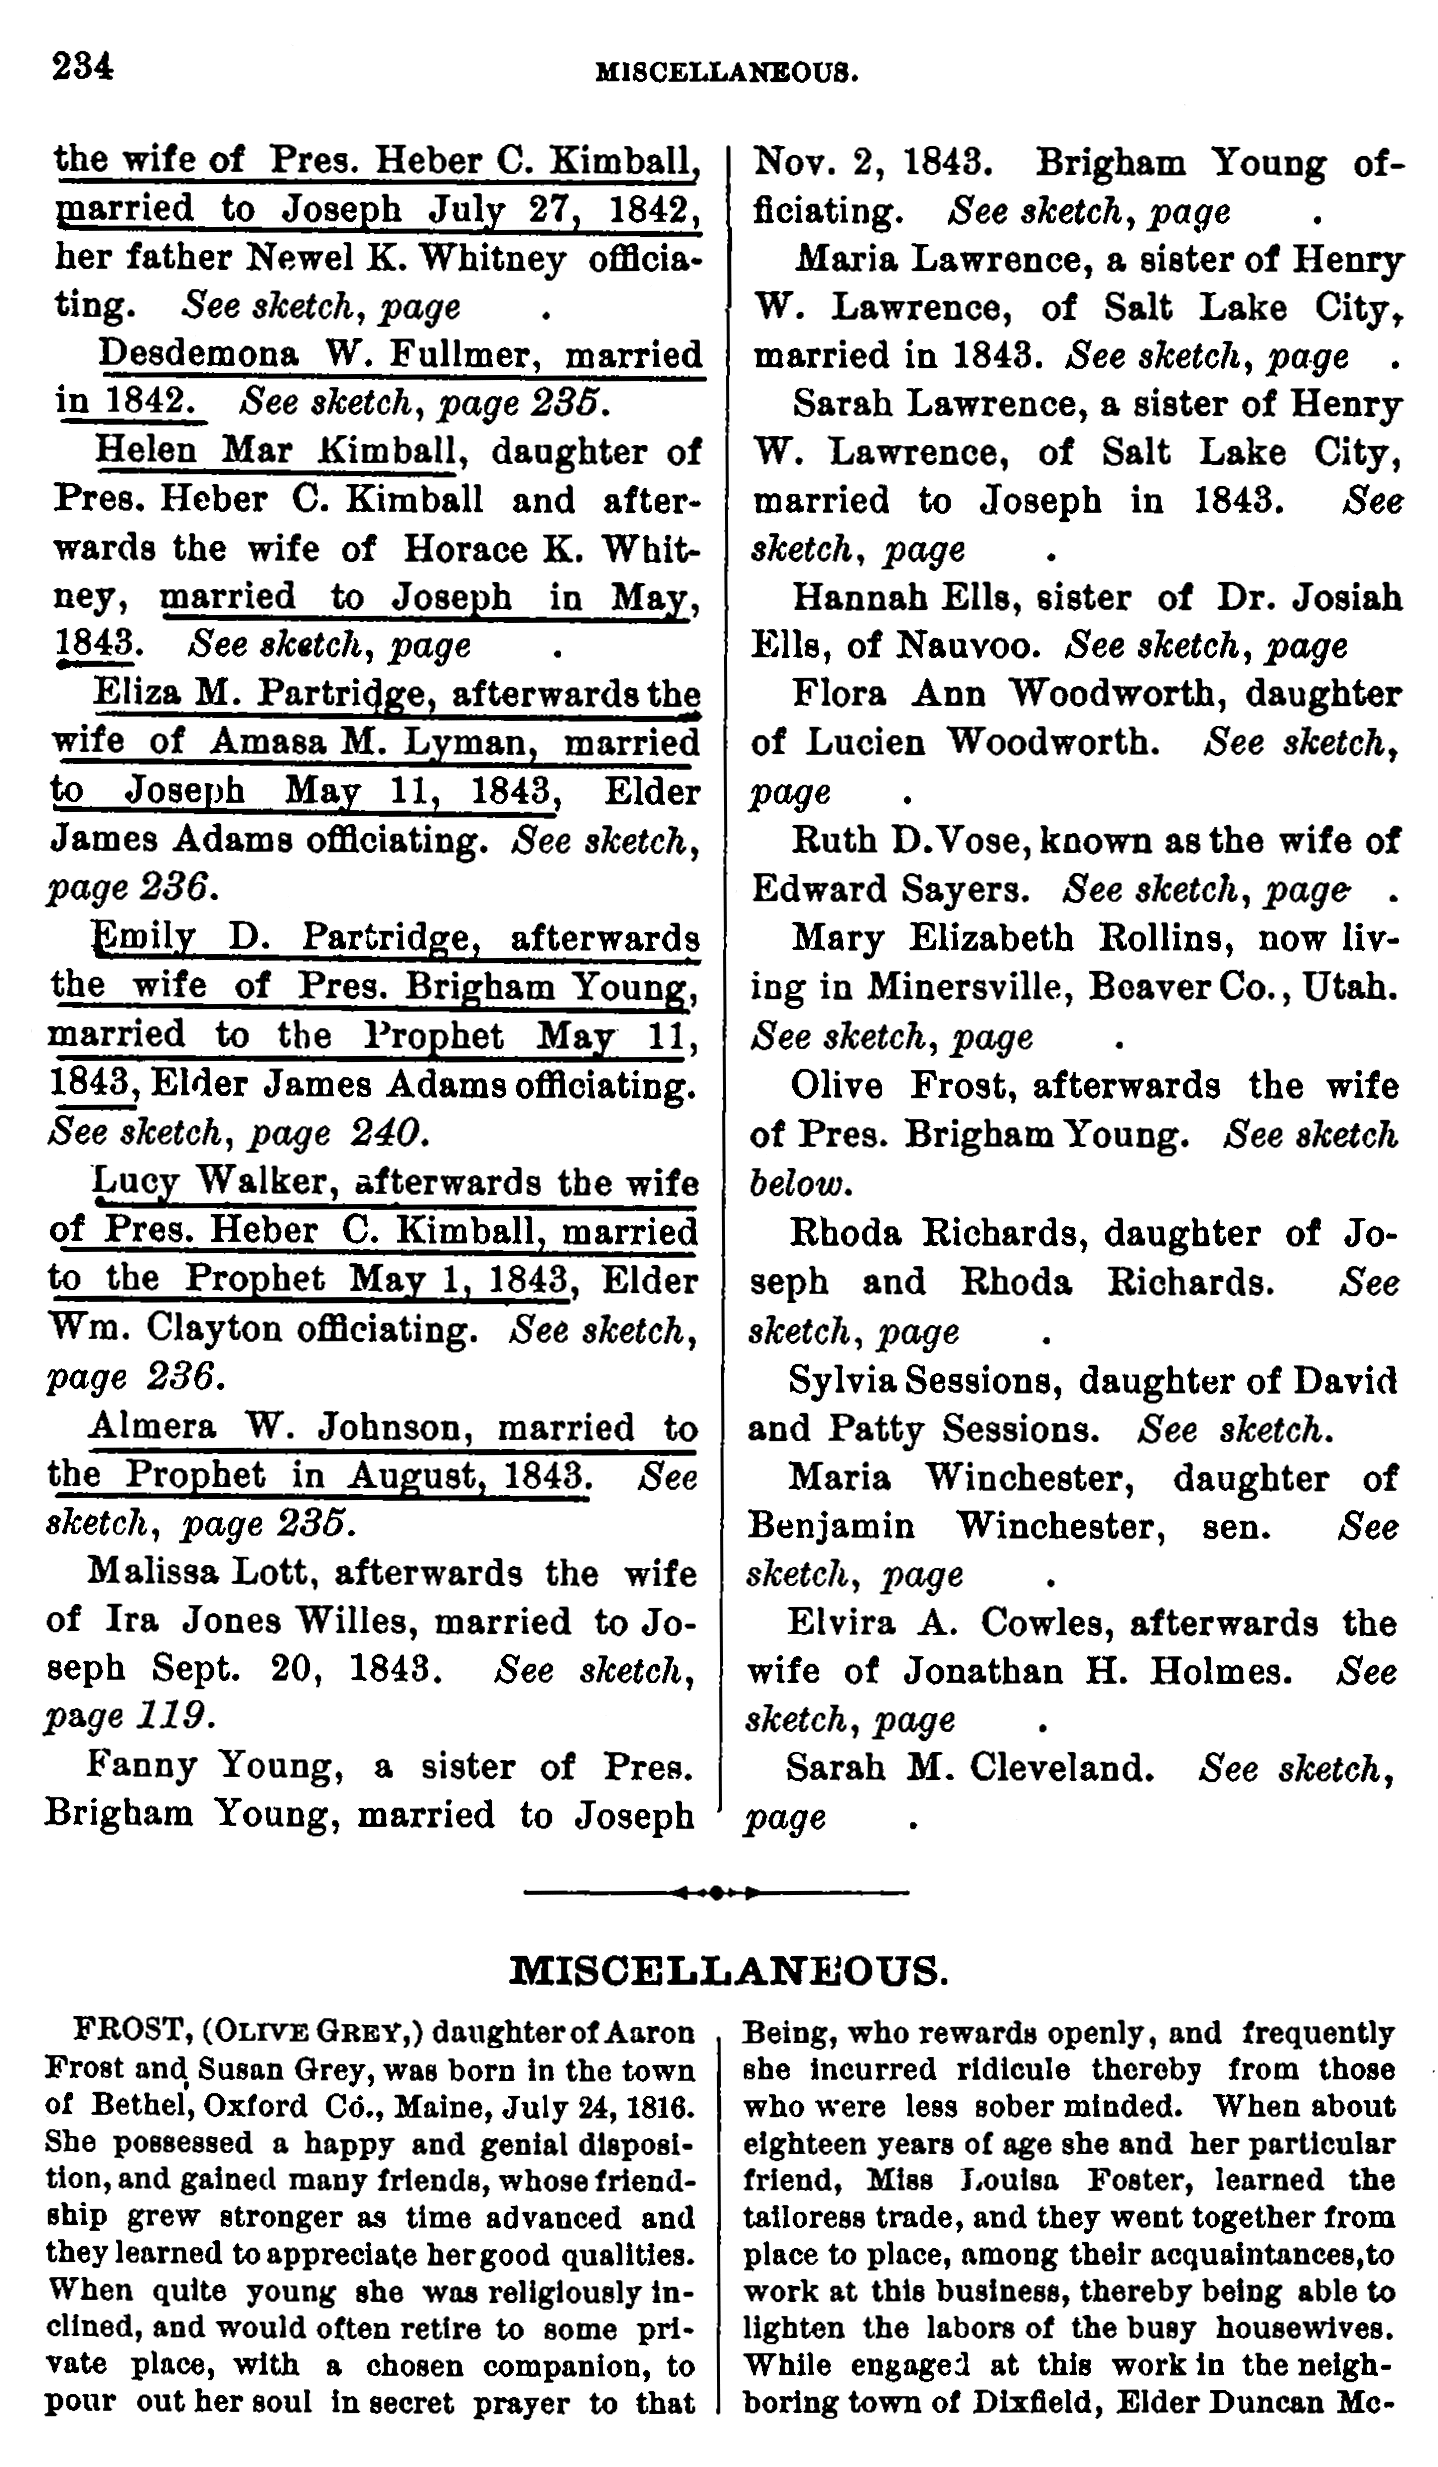 Historical Record, vol. 6, p. 234